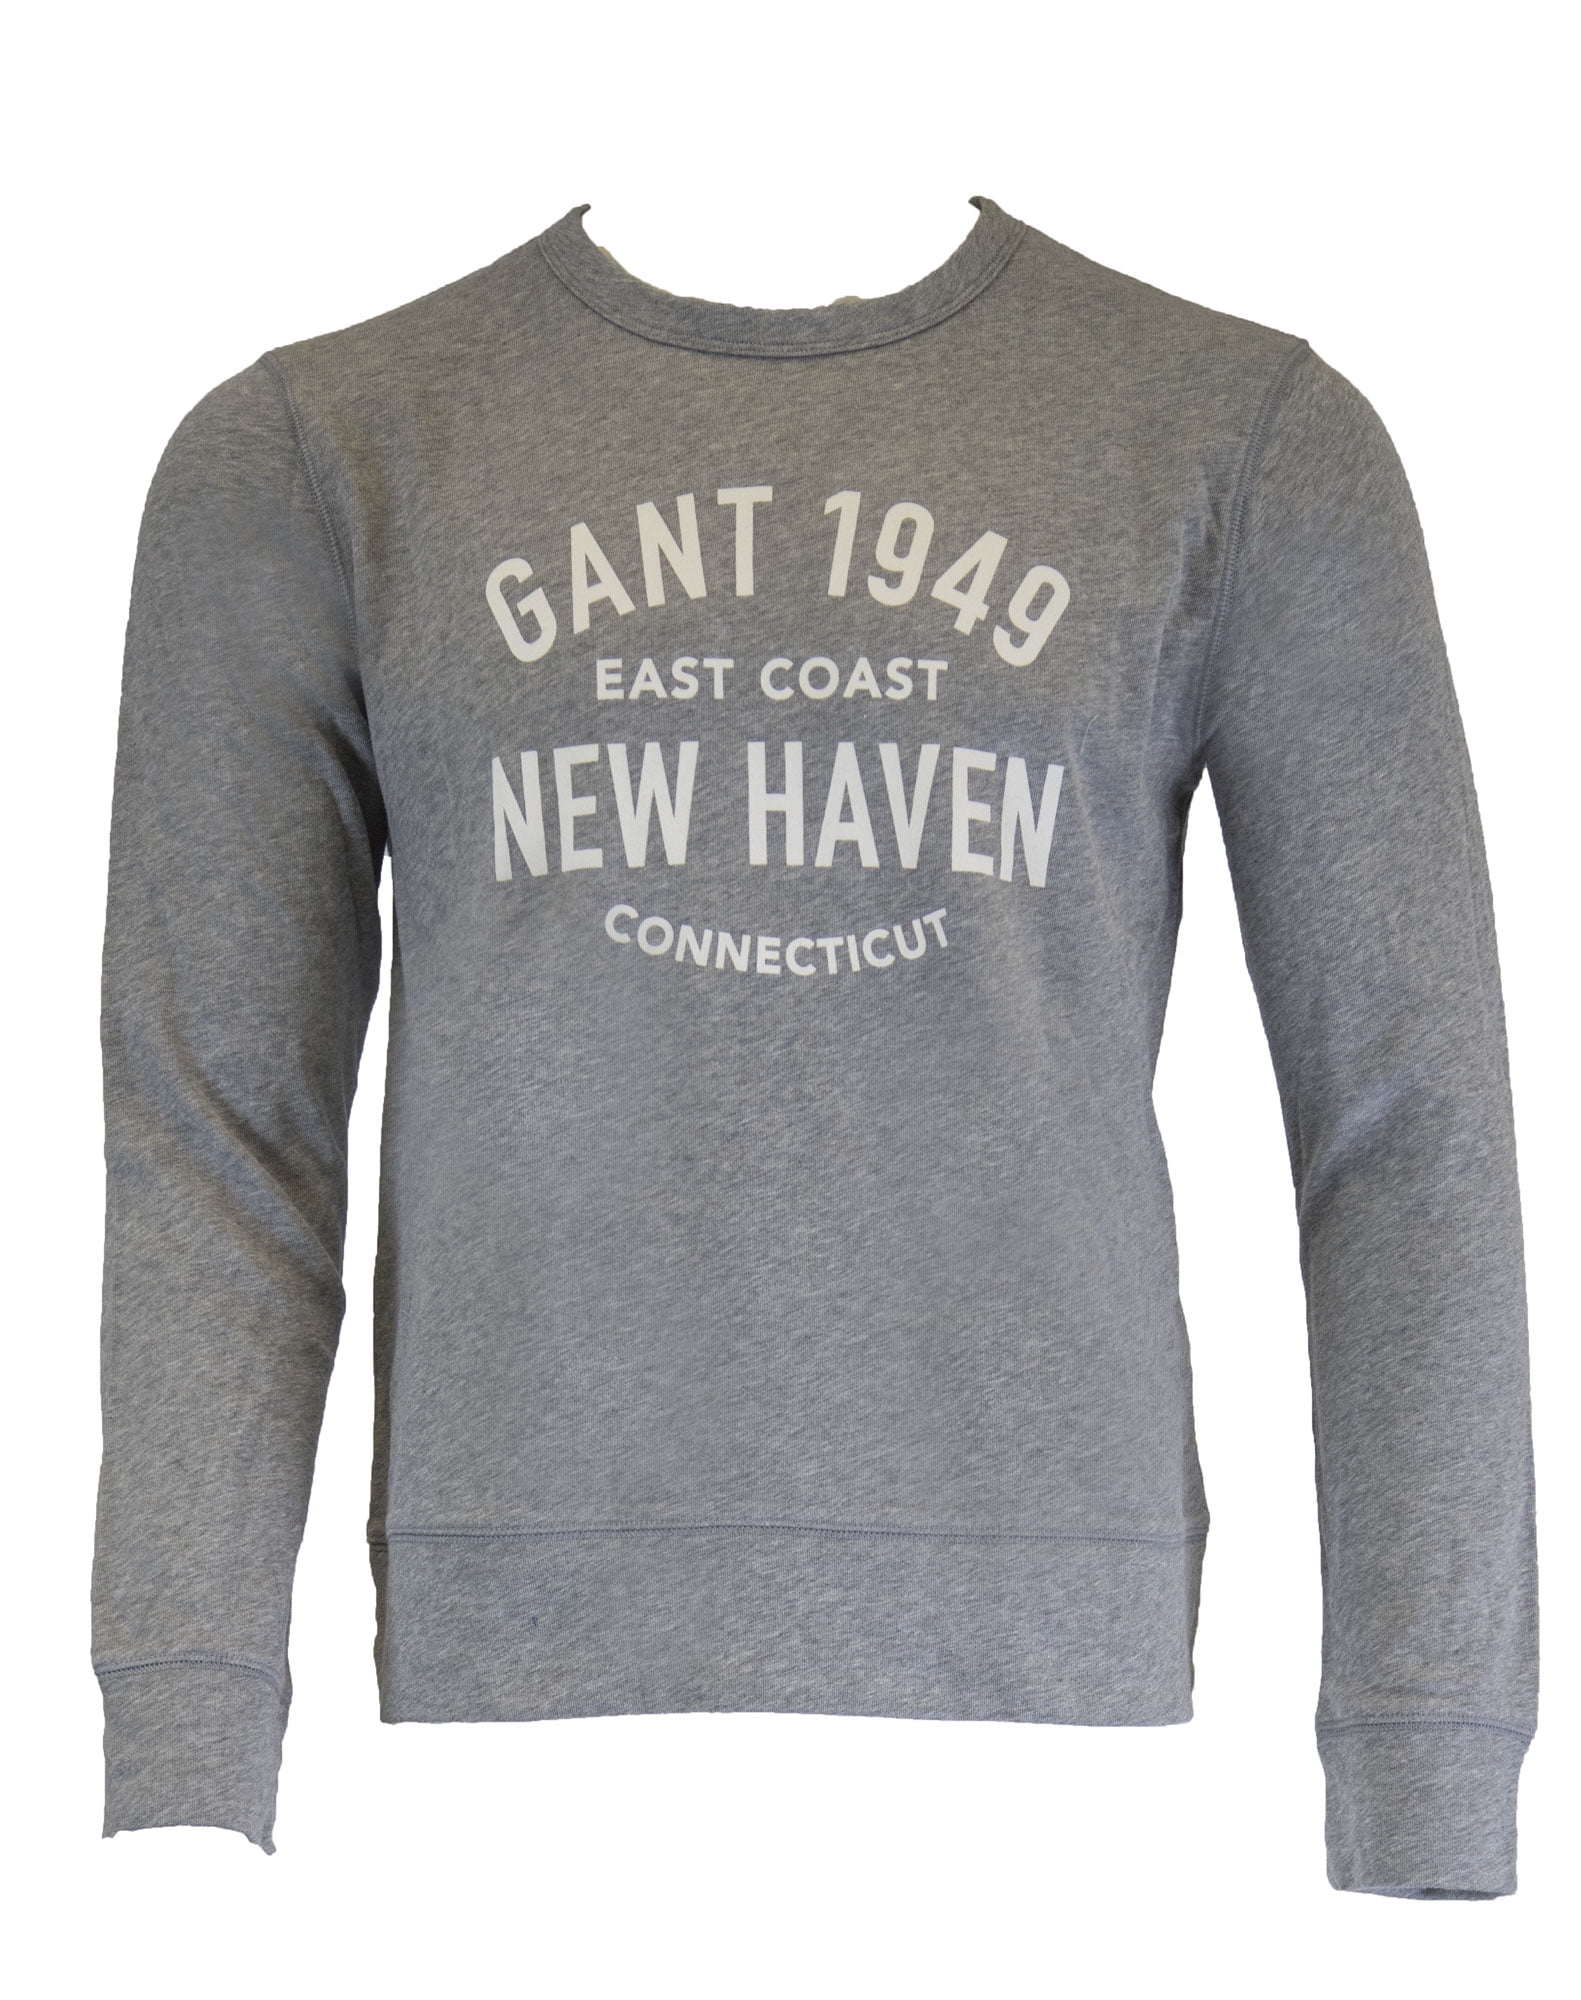 Gant Sweatshirt, Grey C-Neck Medium, Gant Haven Men\'s New Melange O2